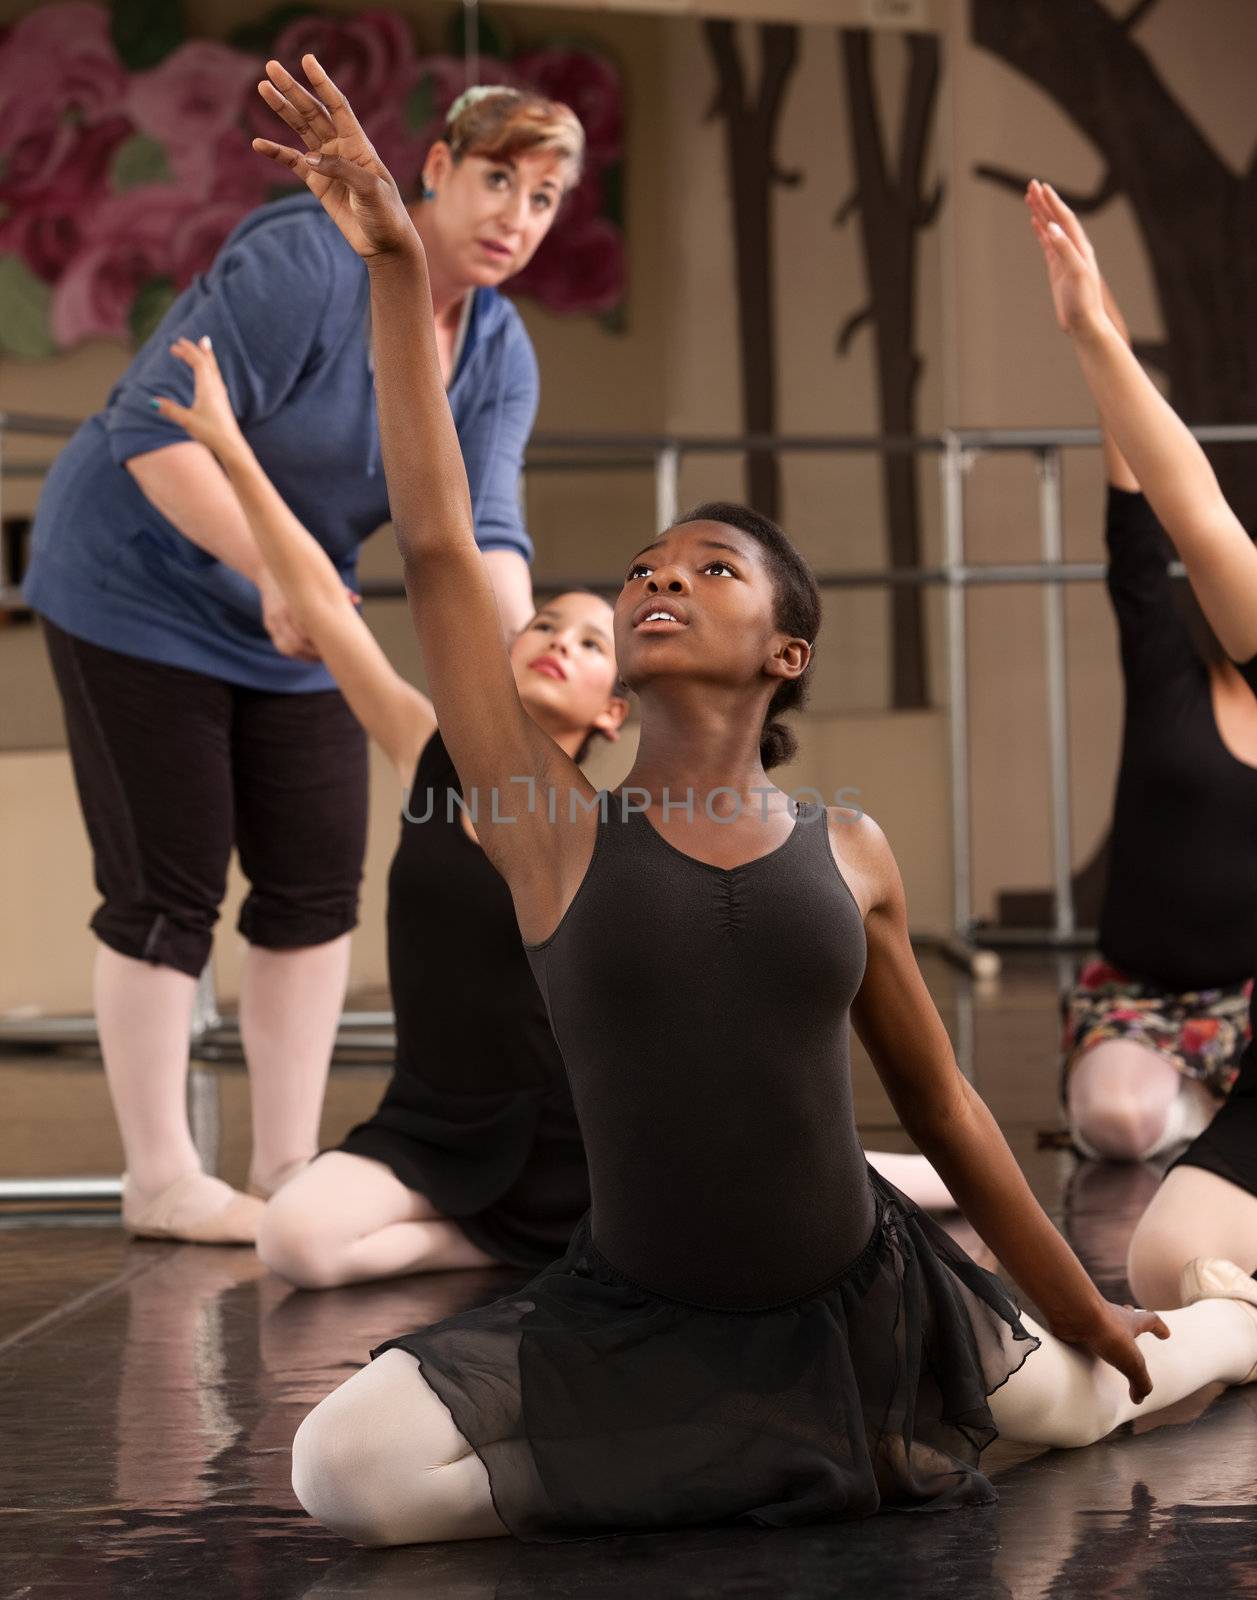 Ballet class teacher helps students practice dance moves